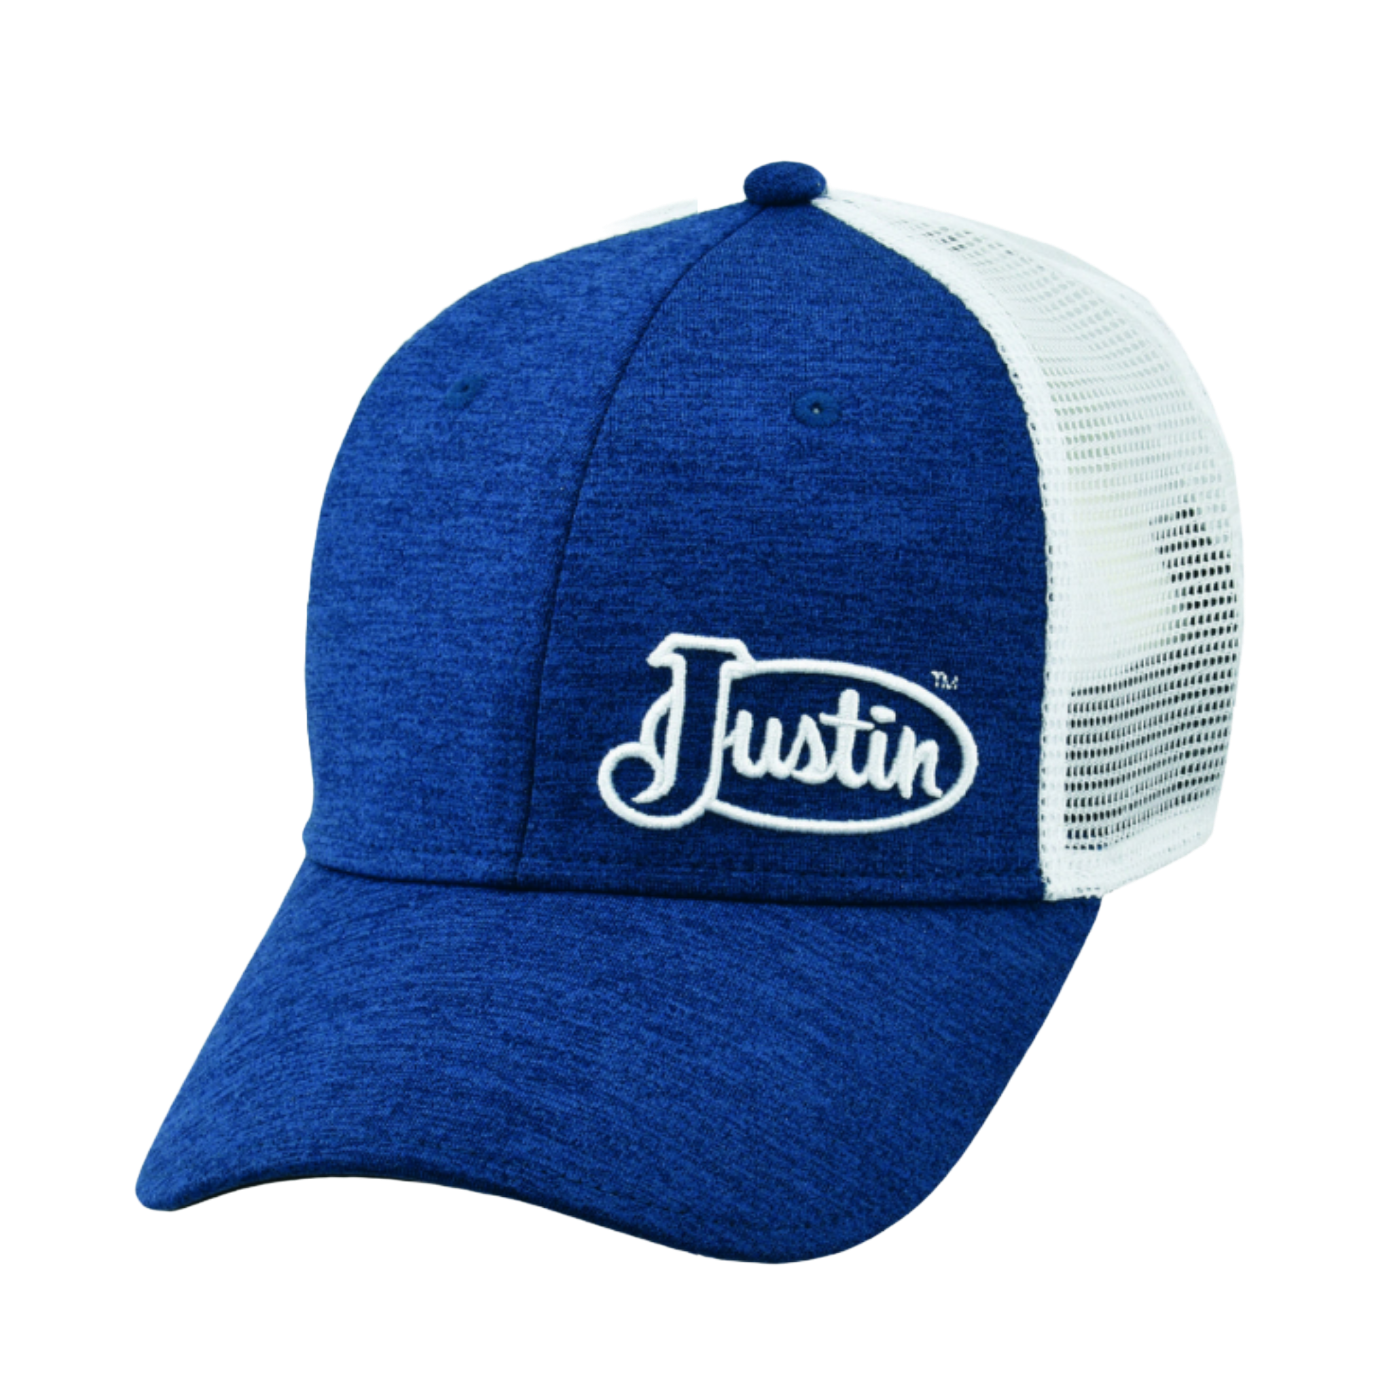 Justin® Men's Navy Heather Logo Trucker Cap JCBC712-NAVY